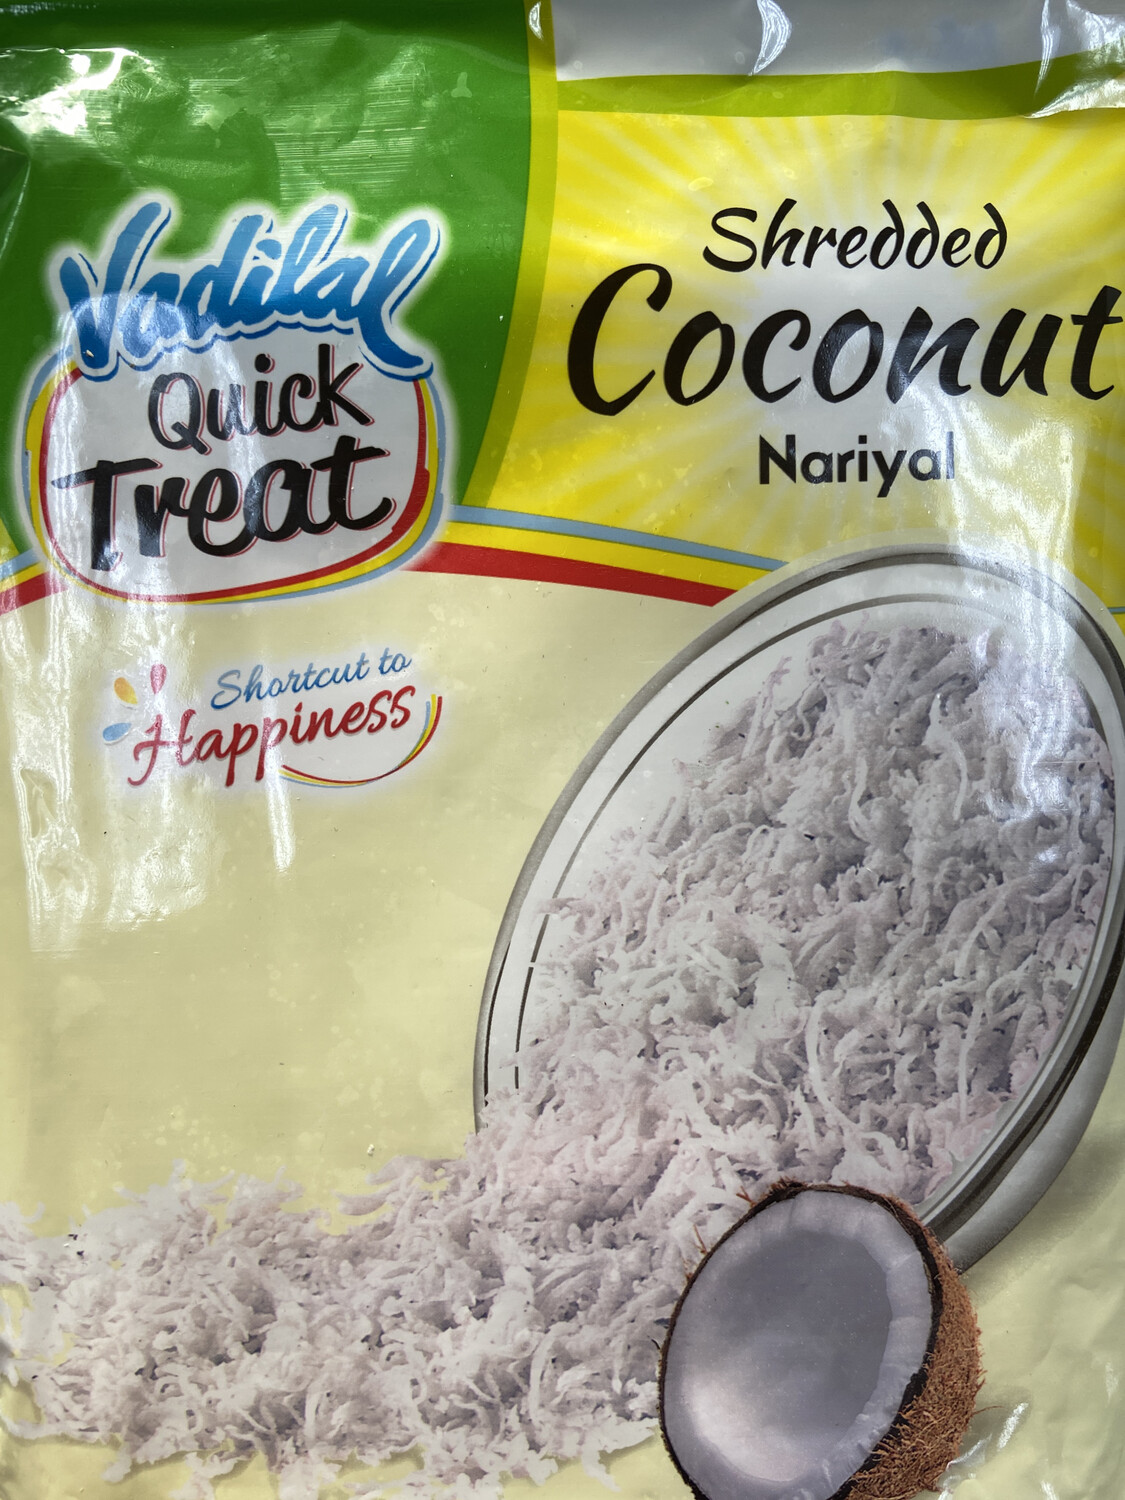 Vadilal Coconut Shredded 312g